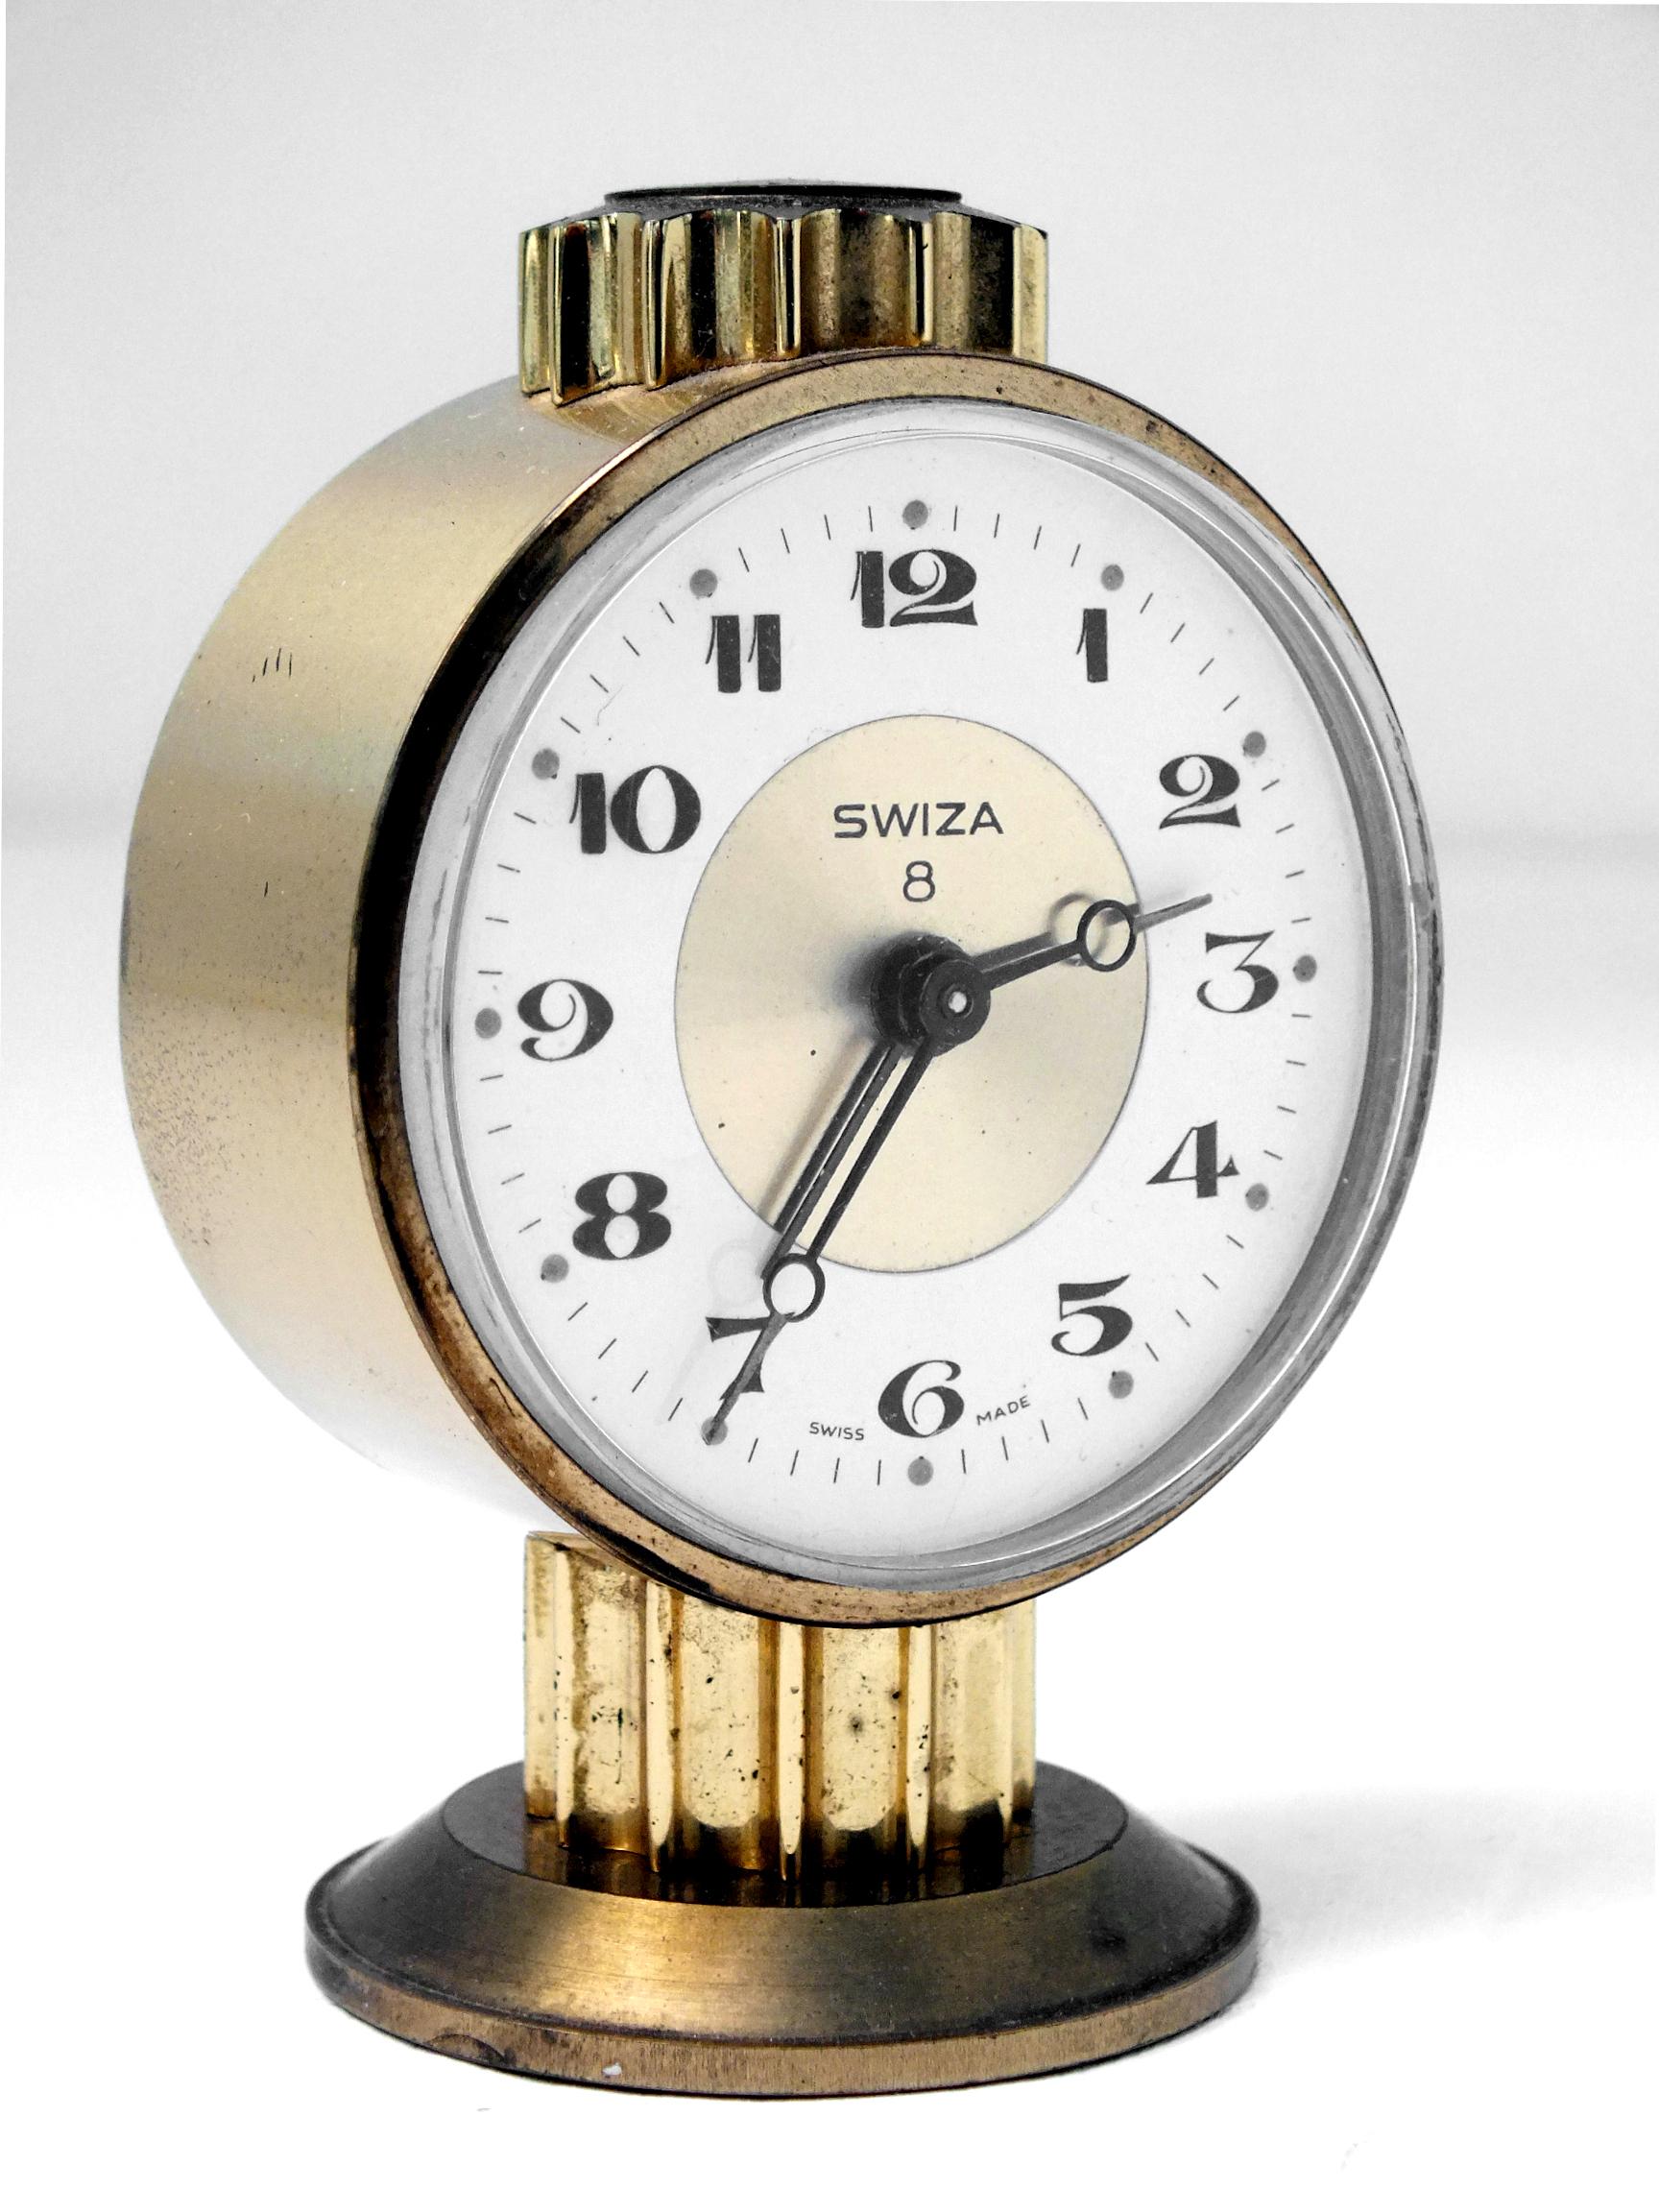 Swiza 8 days vintage alarm clock Swiss design table clock in brass in good vintage condition.